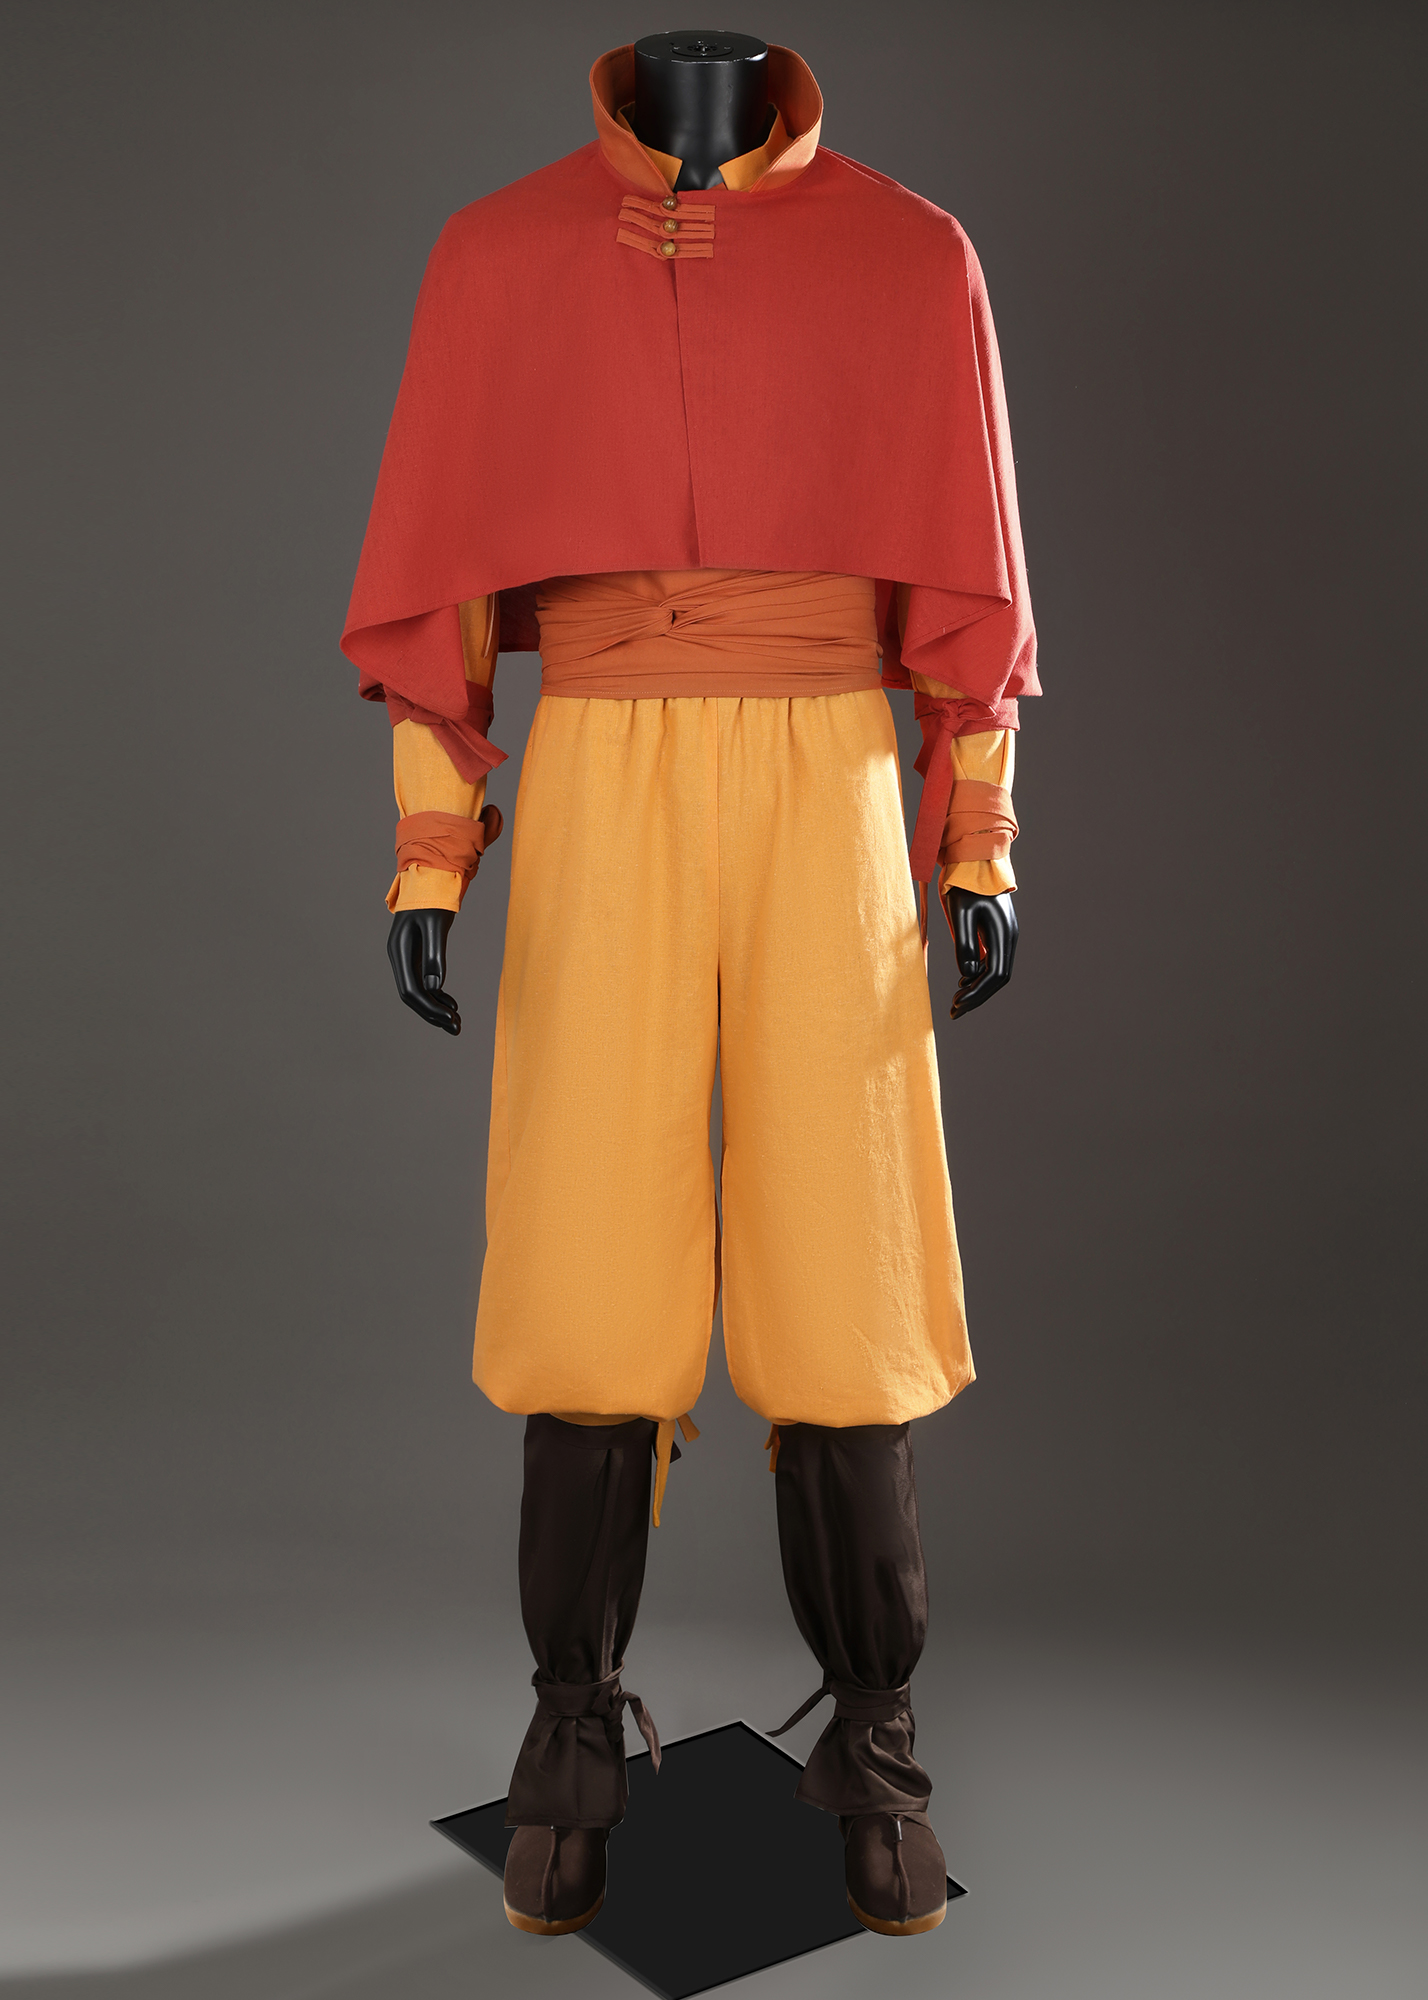 Aang Costume Avatar: The Last Airbender Suit Cosplay Ver.2